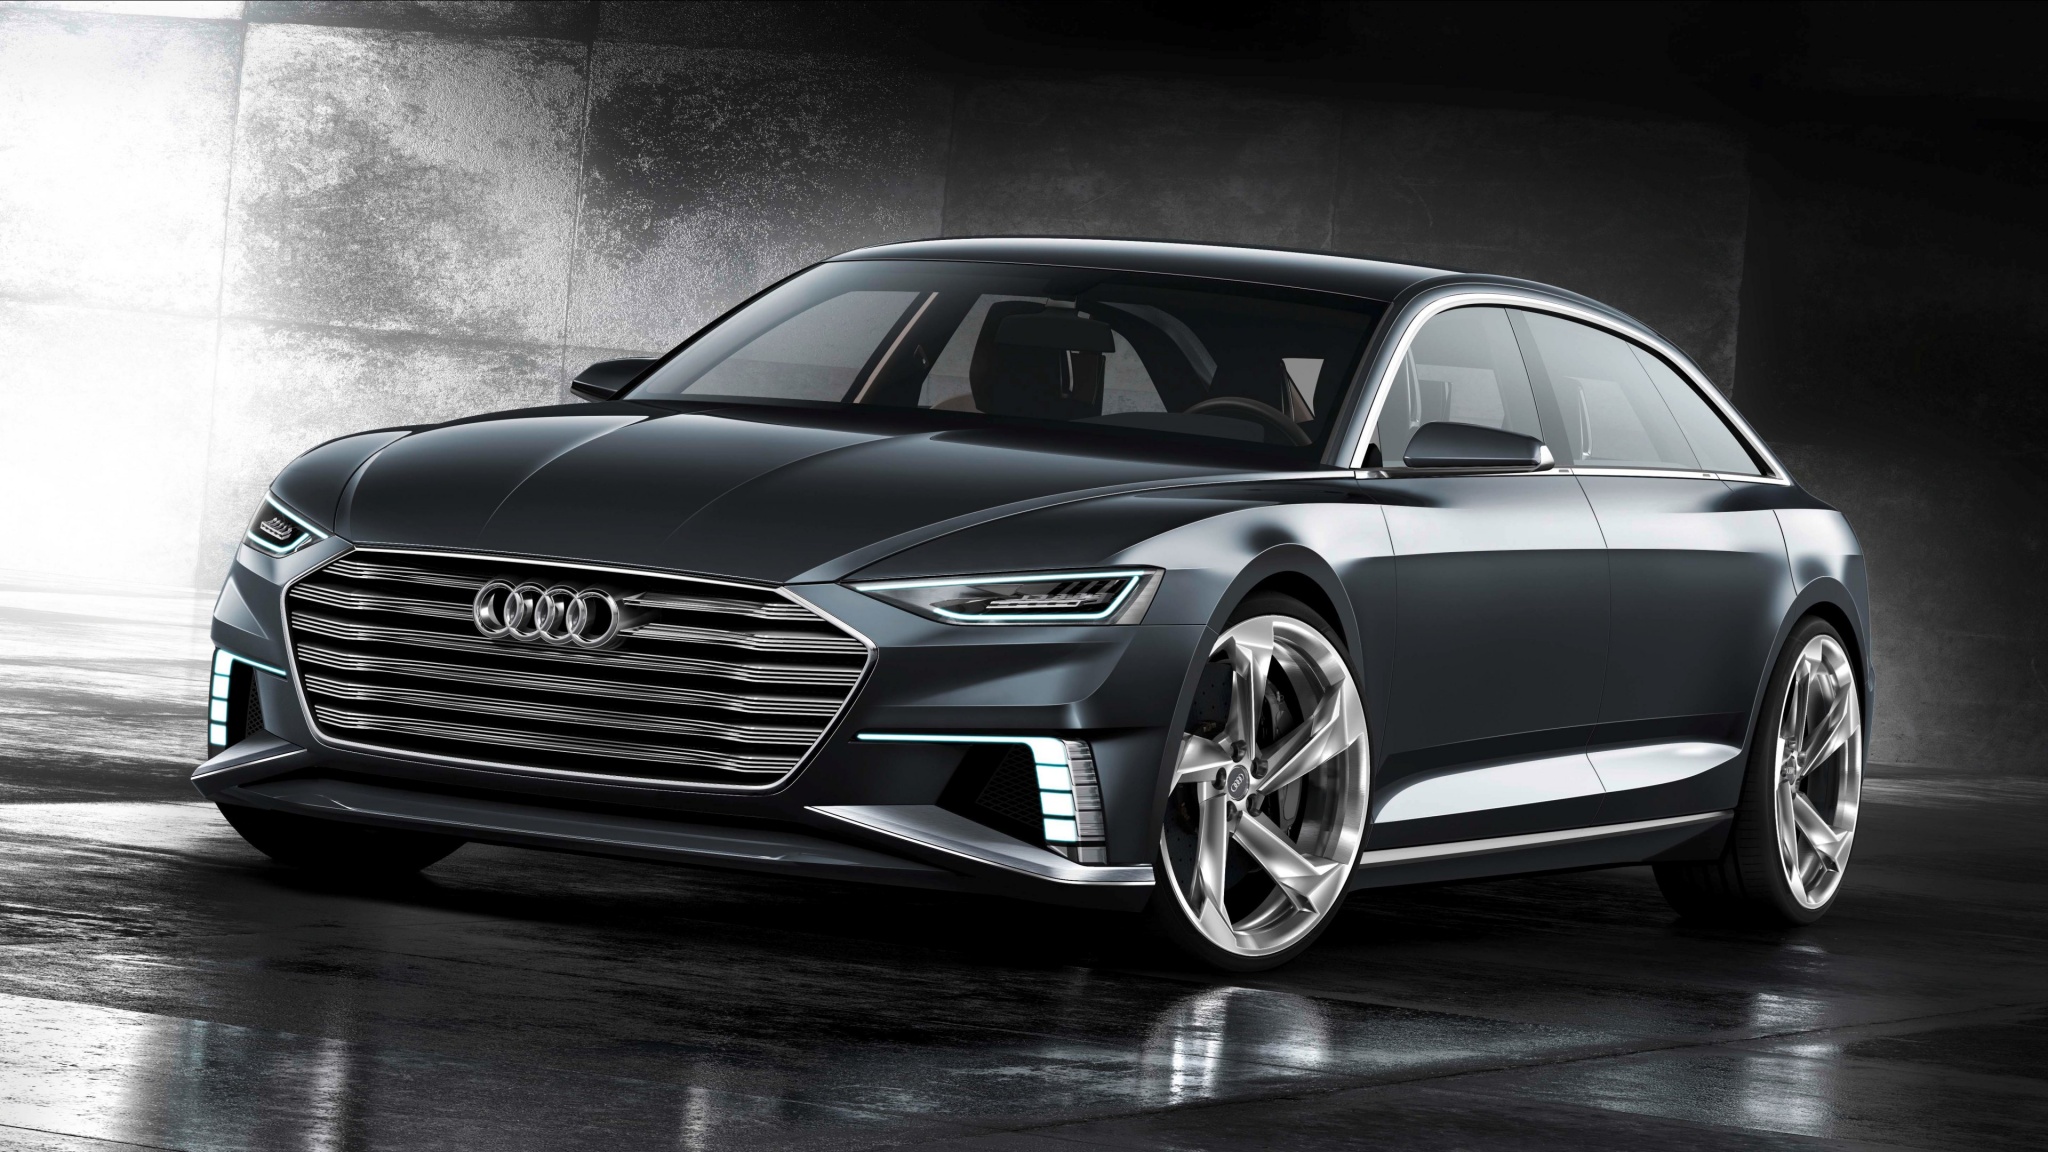 Audi Prologue Avant Concept 2015